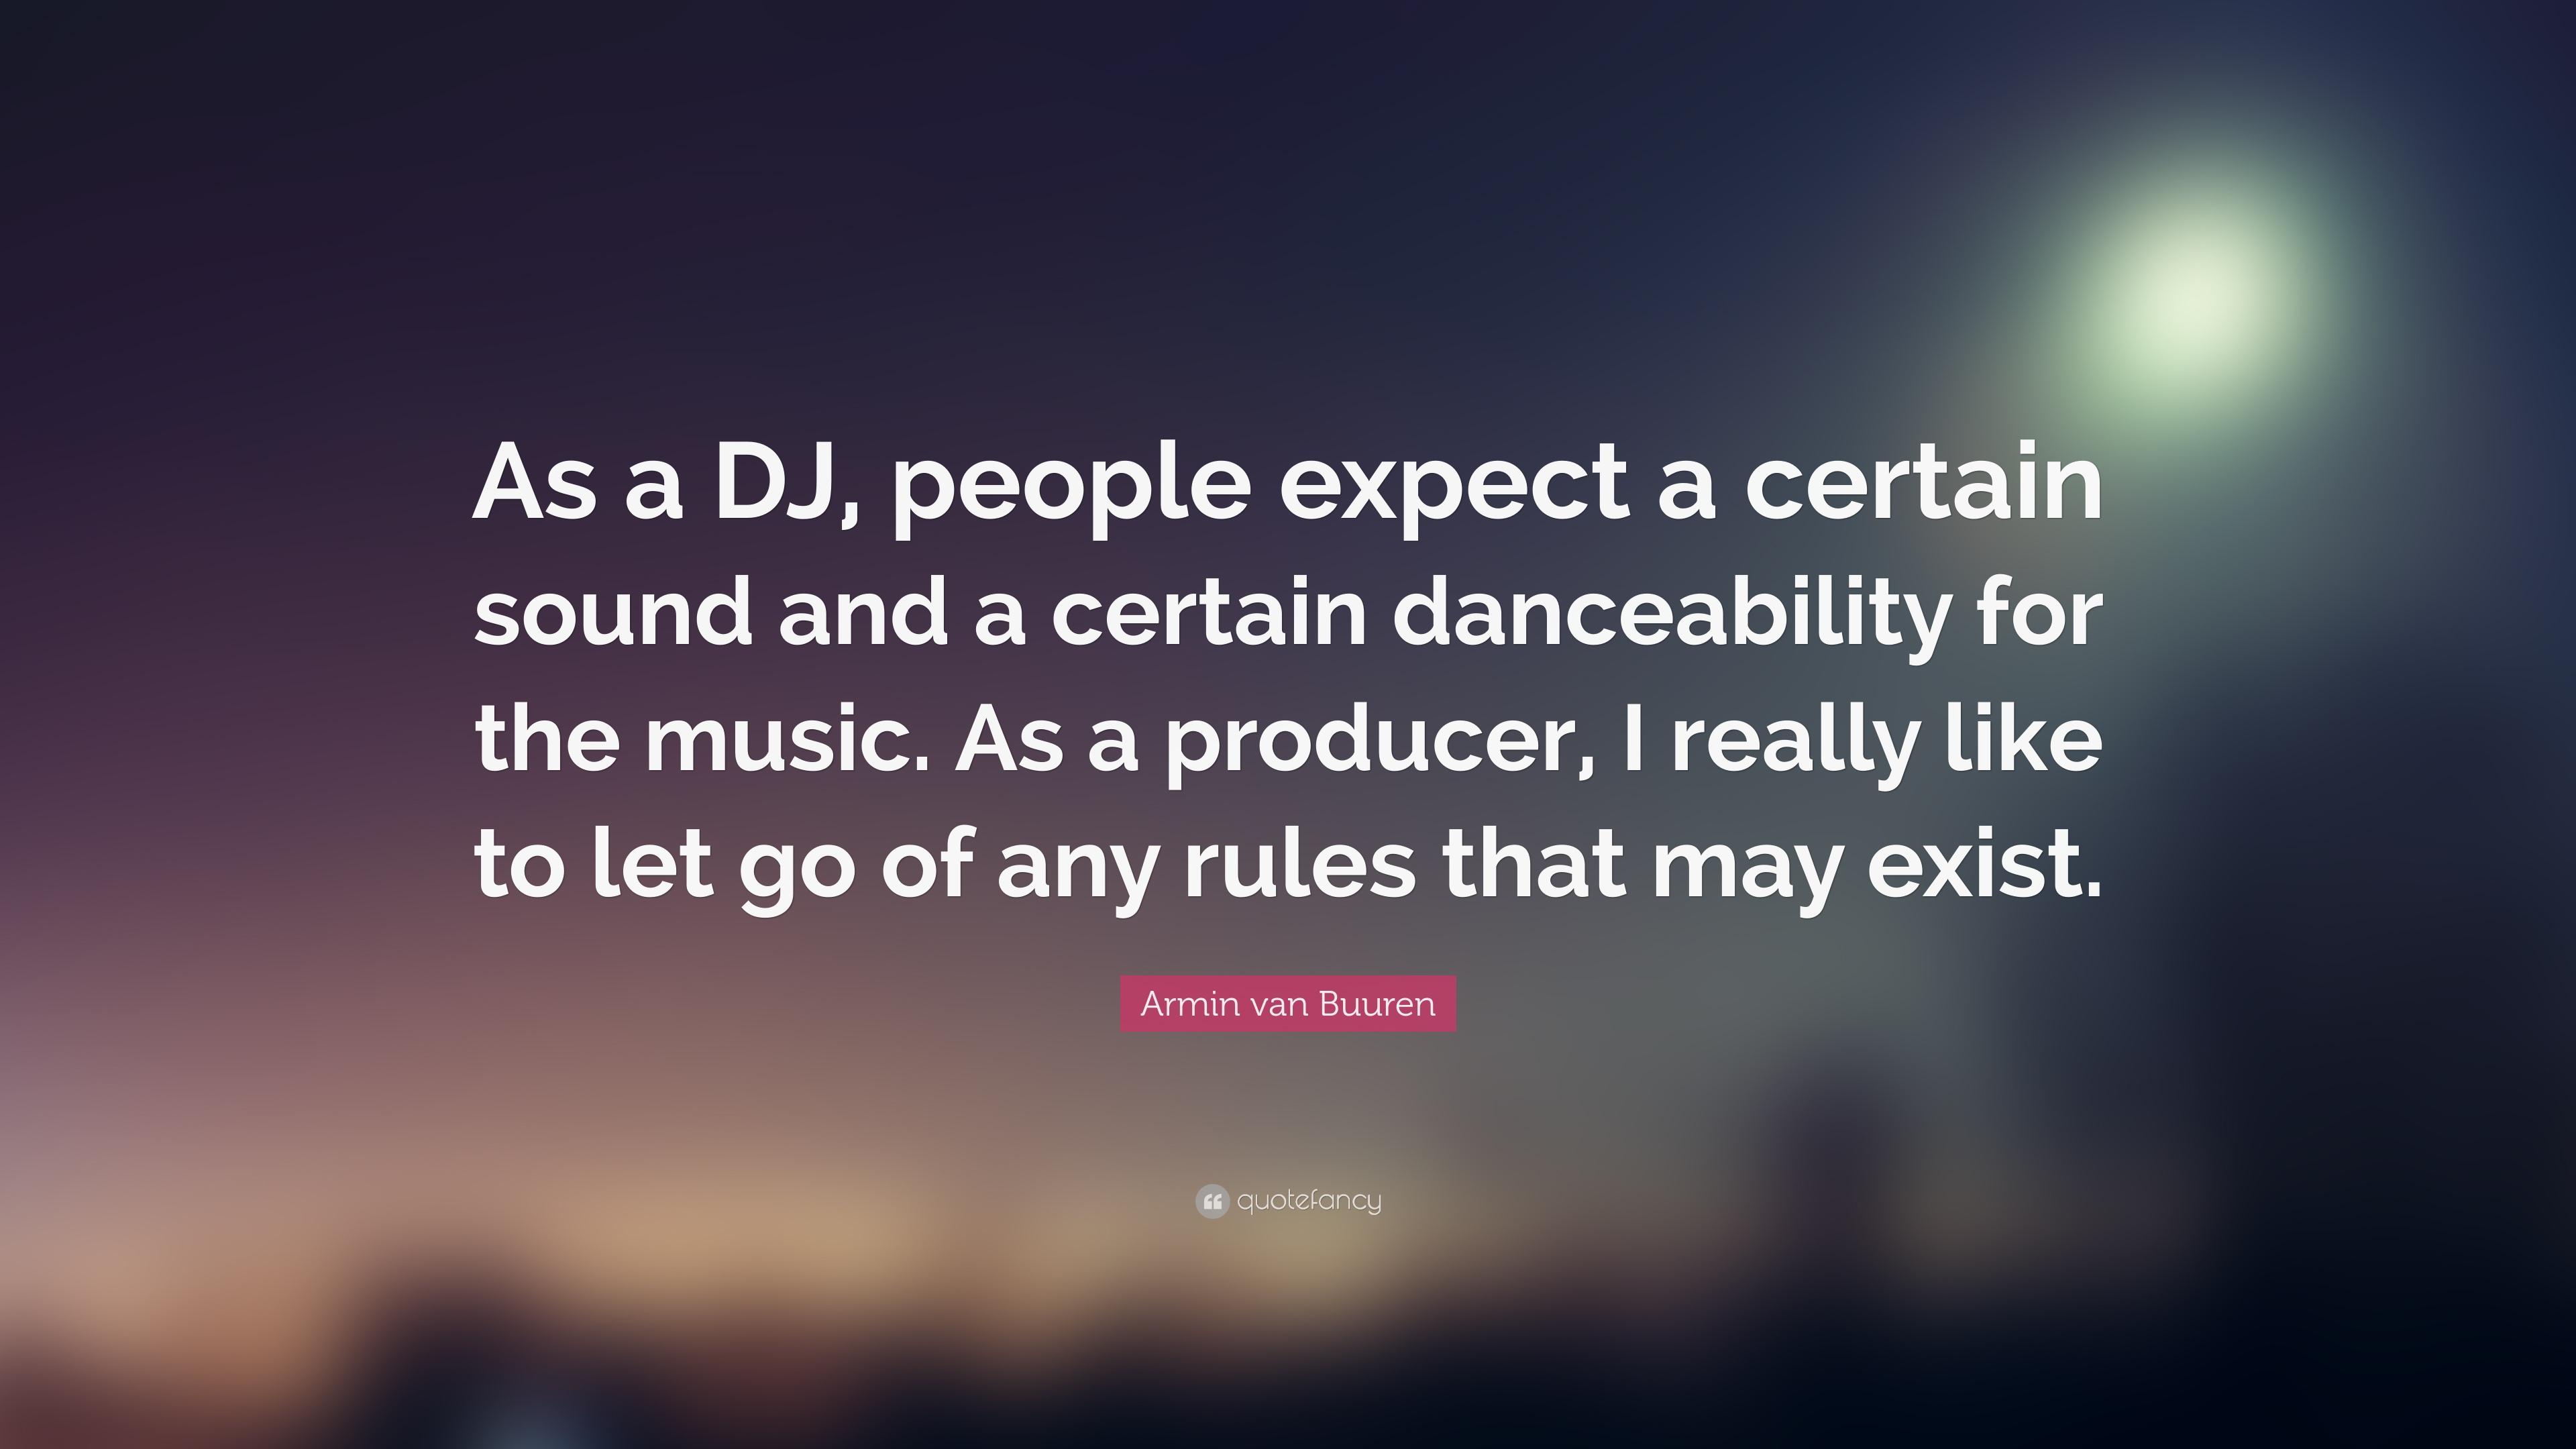 Armin van Buuren Quote: “As a DJ, people expect a certain sound